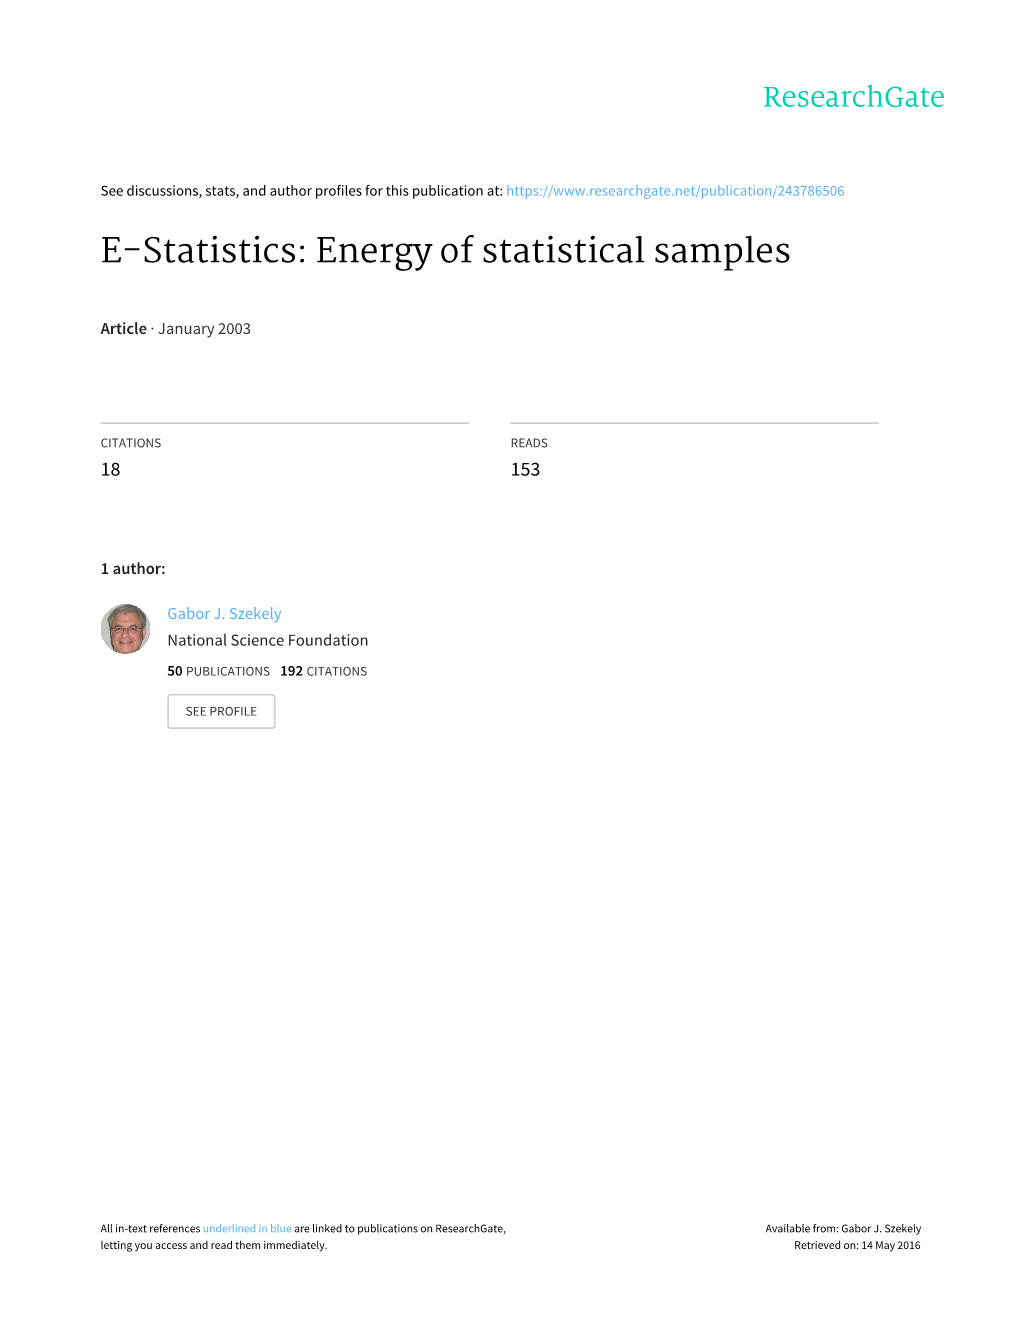 Energy of Statistical Samples